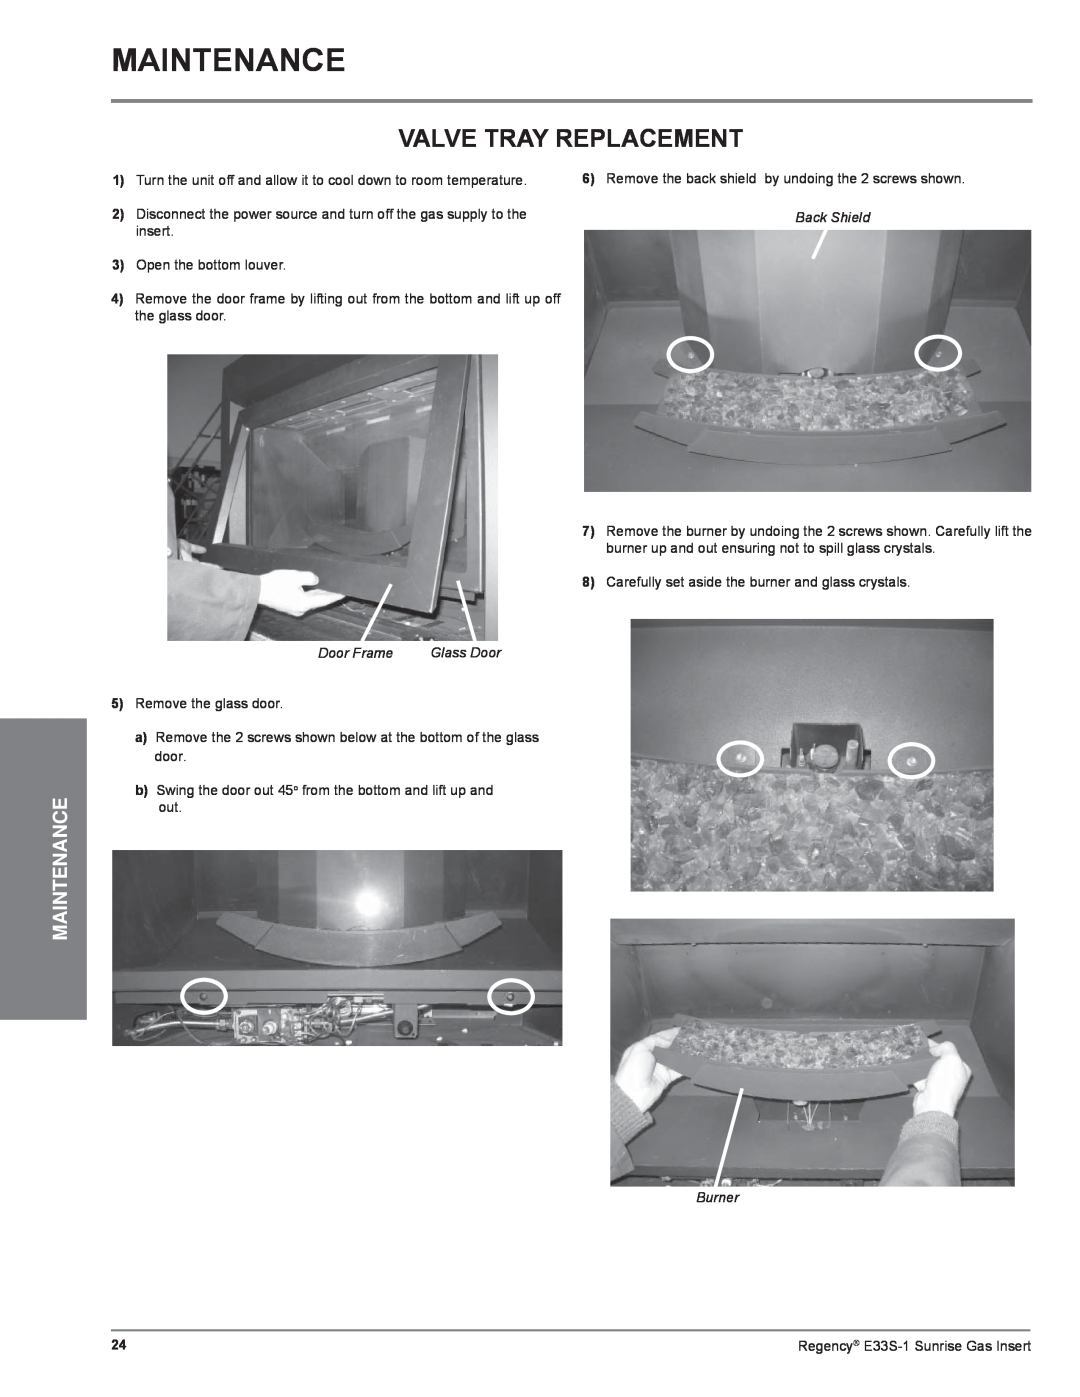 Regency E33S installation manual Maintenance, Valve Tray Replacement, Door Frame, Burner 